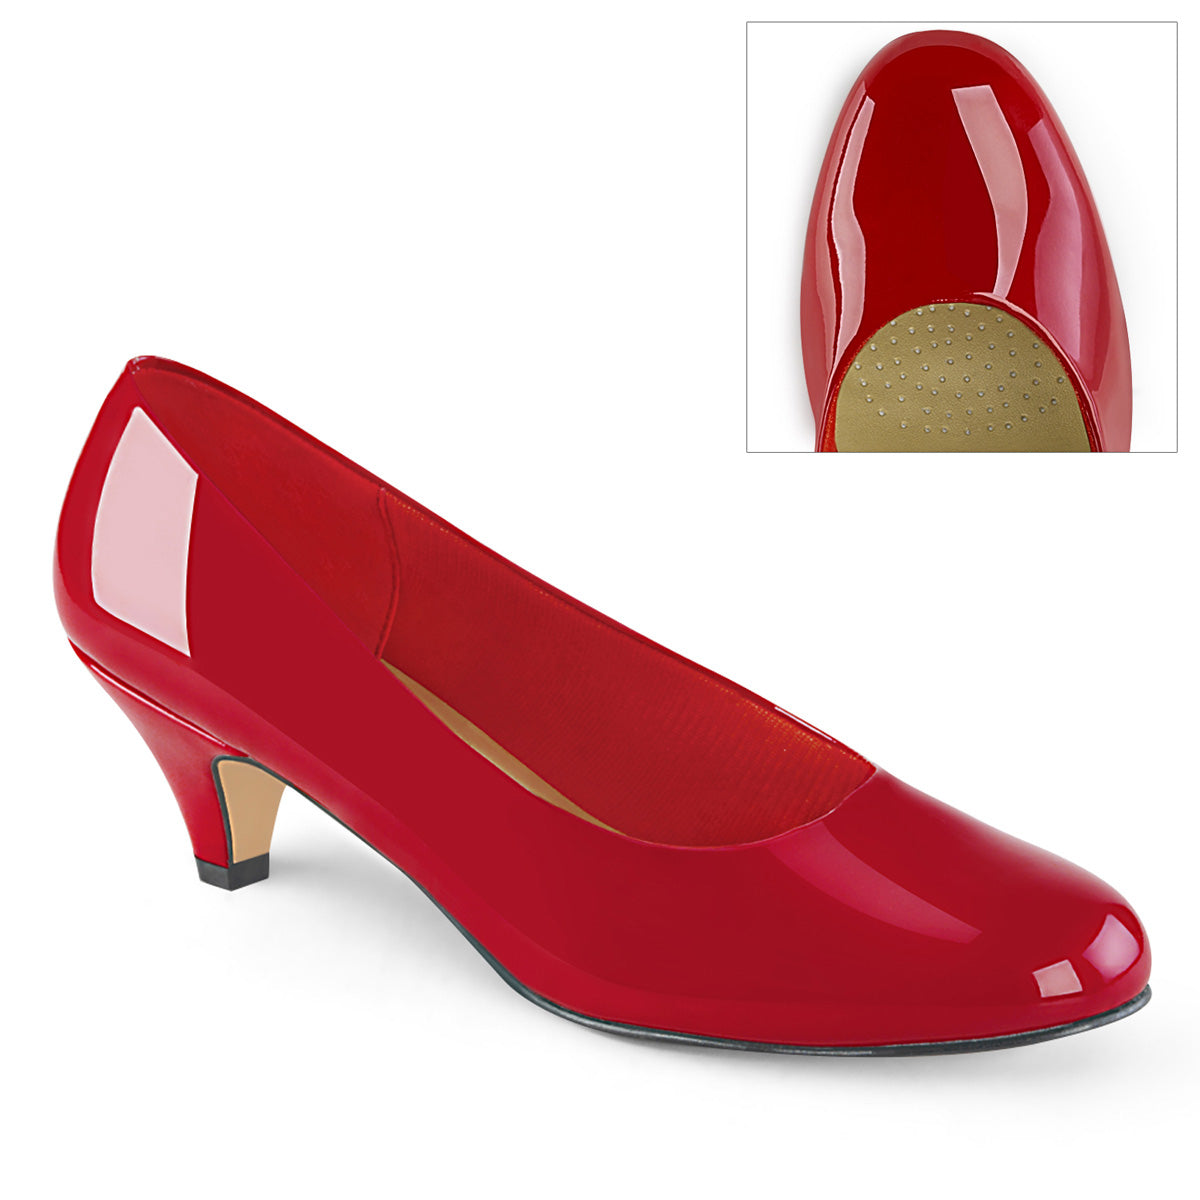 FEFE-01 Pleaser Large Size Ladies Shoes 2.5 Inch Heel Red Fetish Footwear